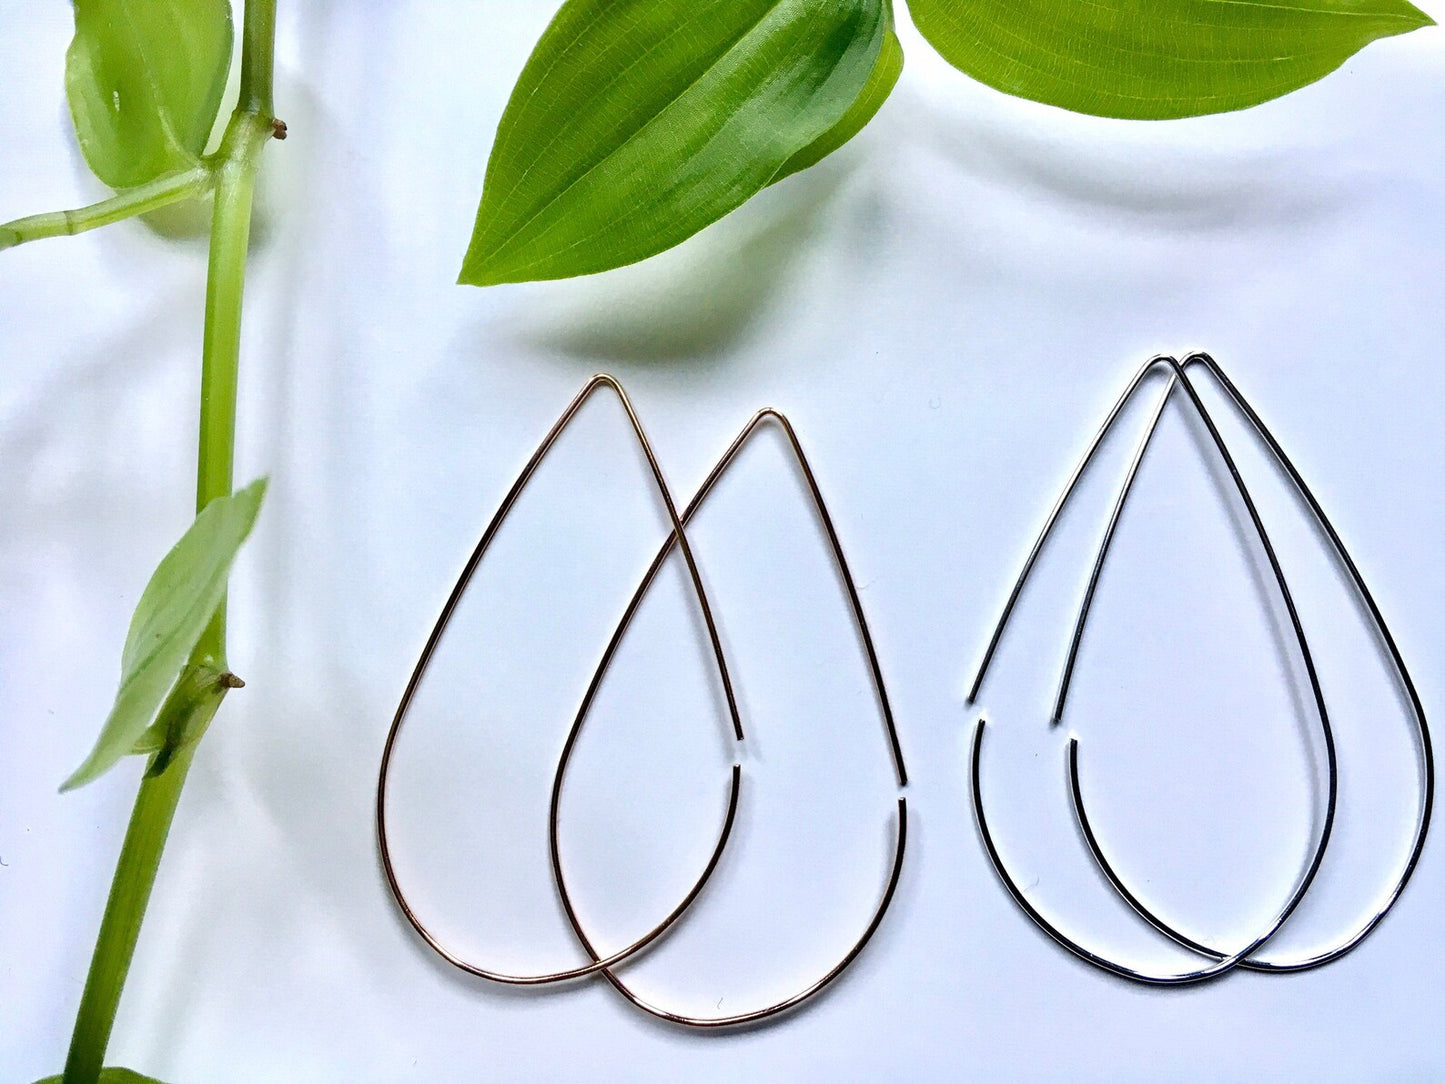 Rose gold or silver plated tear drop earrings, very delicate modern earrings.